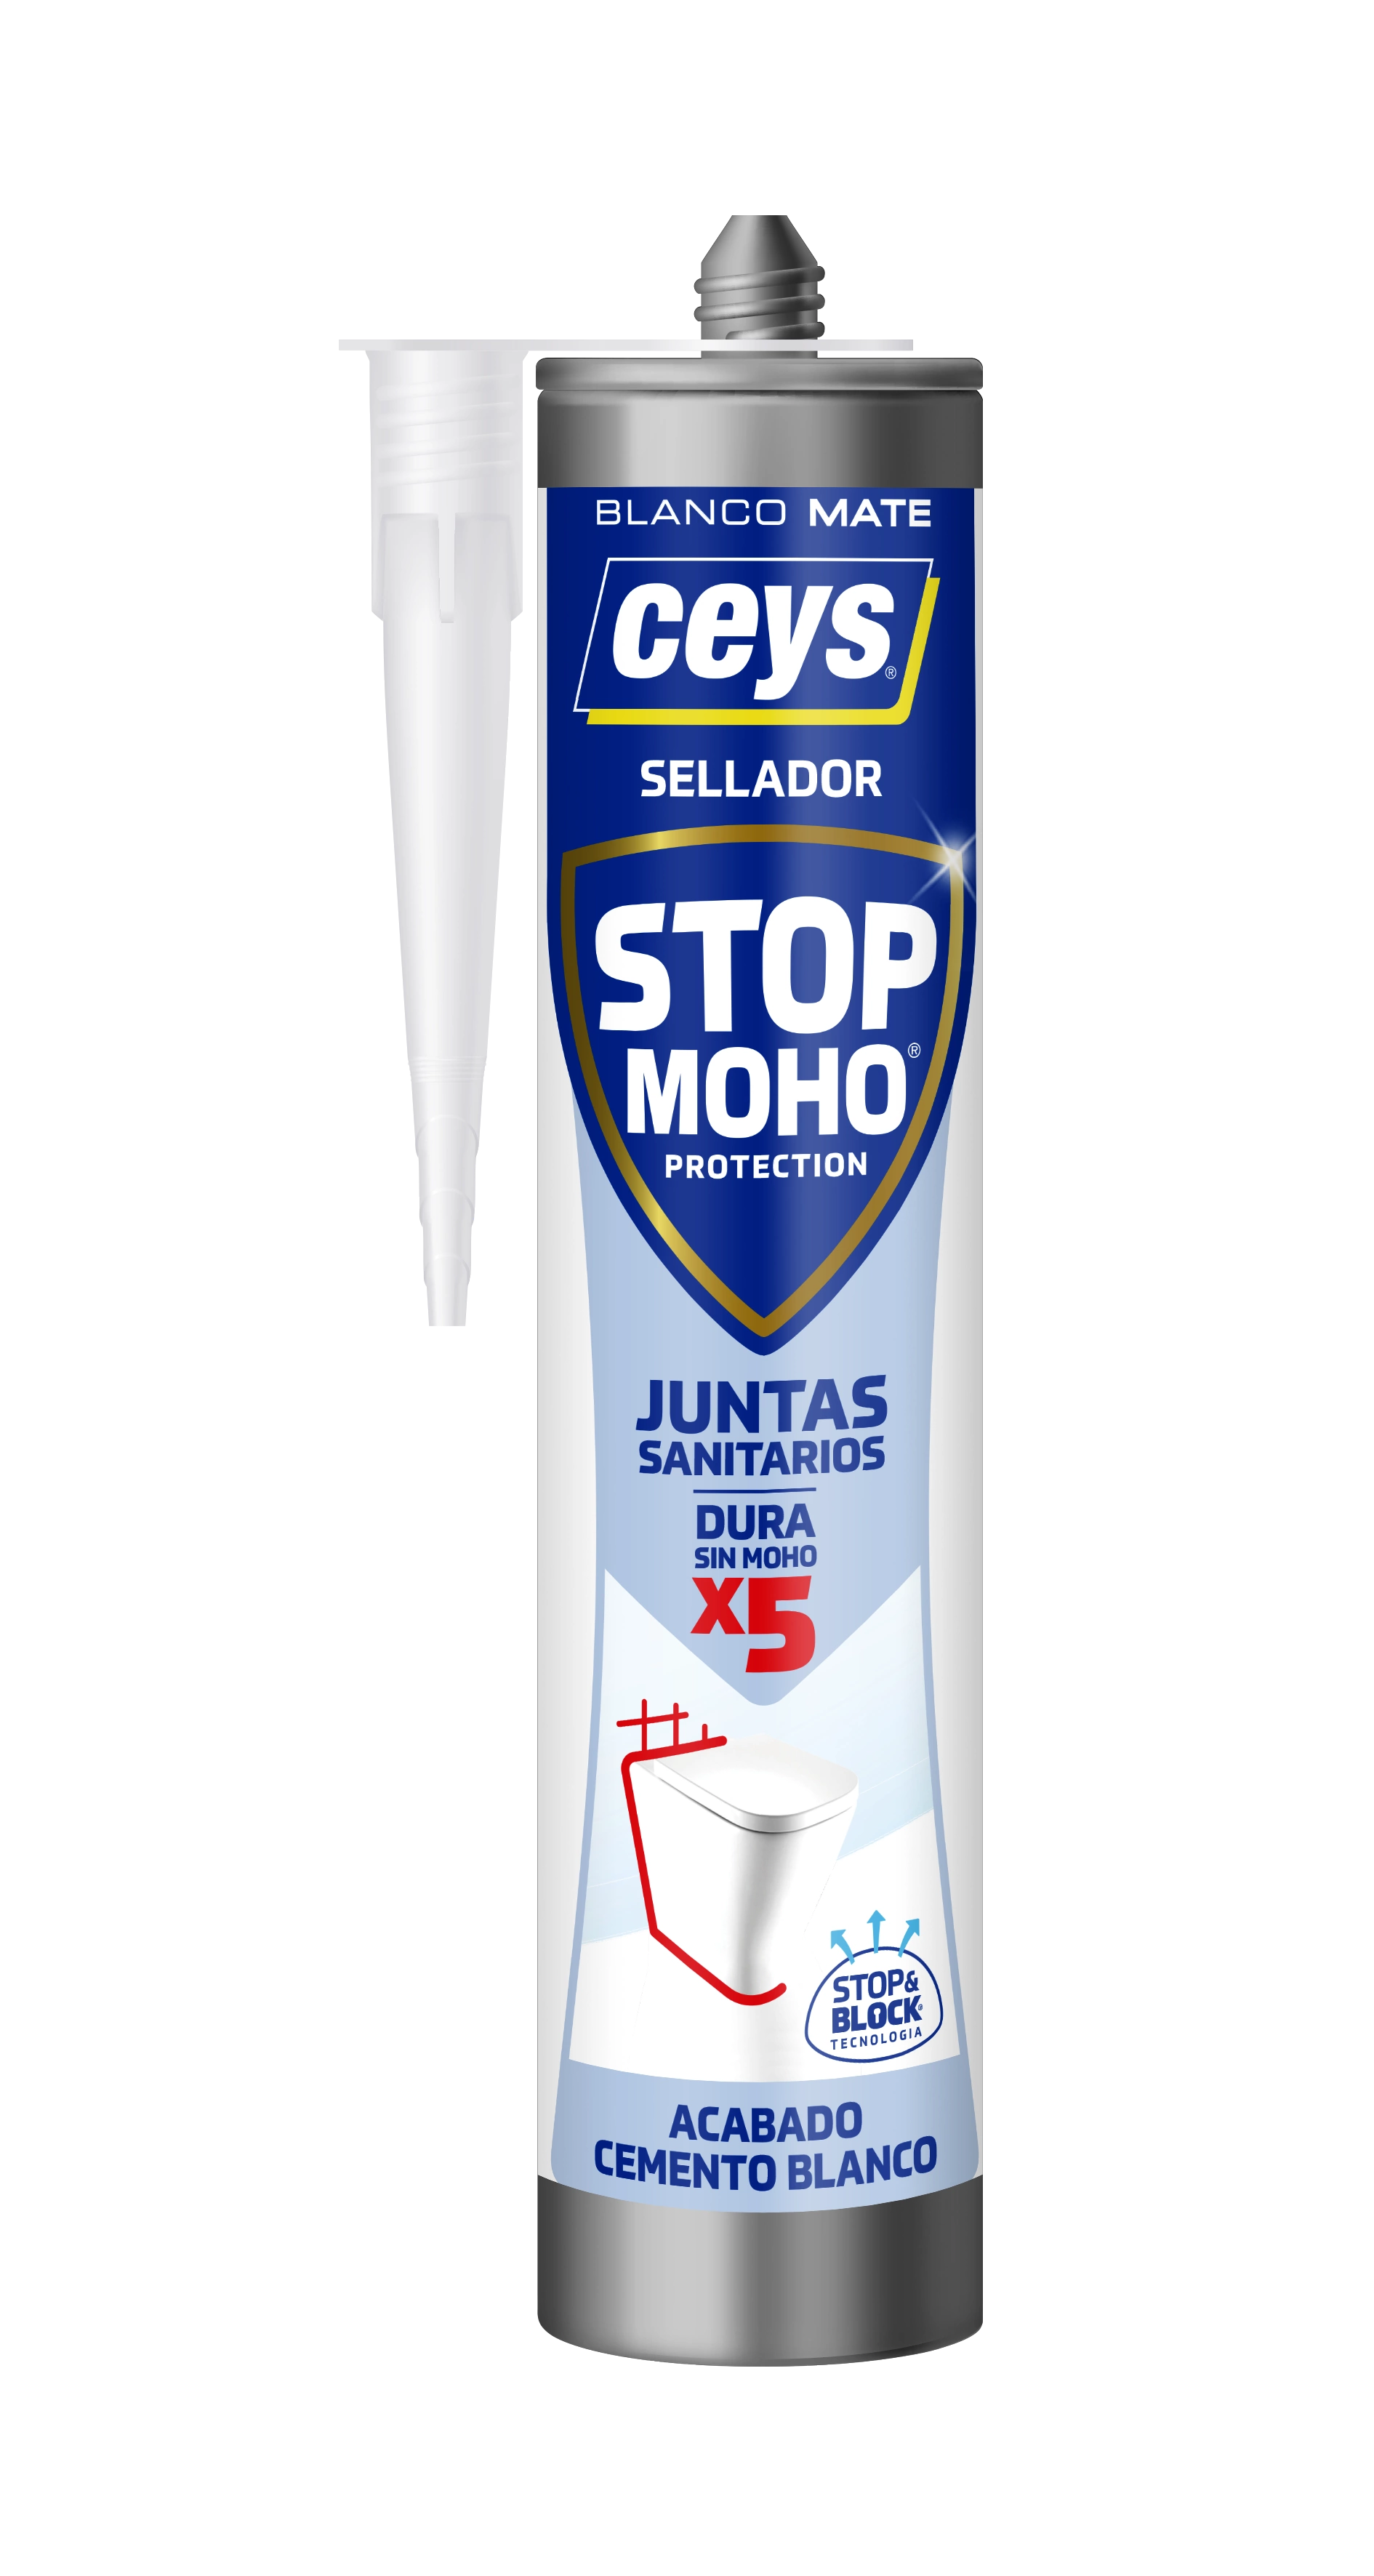 Silicona STOP MOHO Protection - Ceys